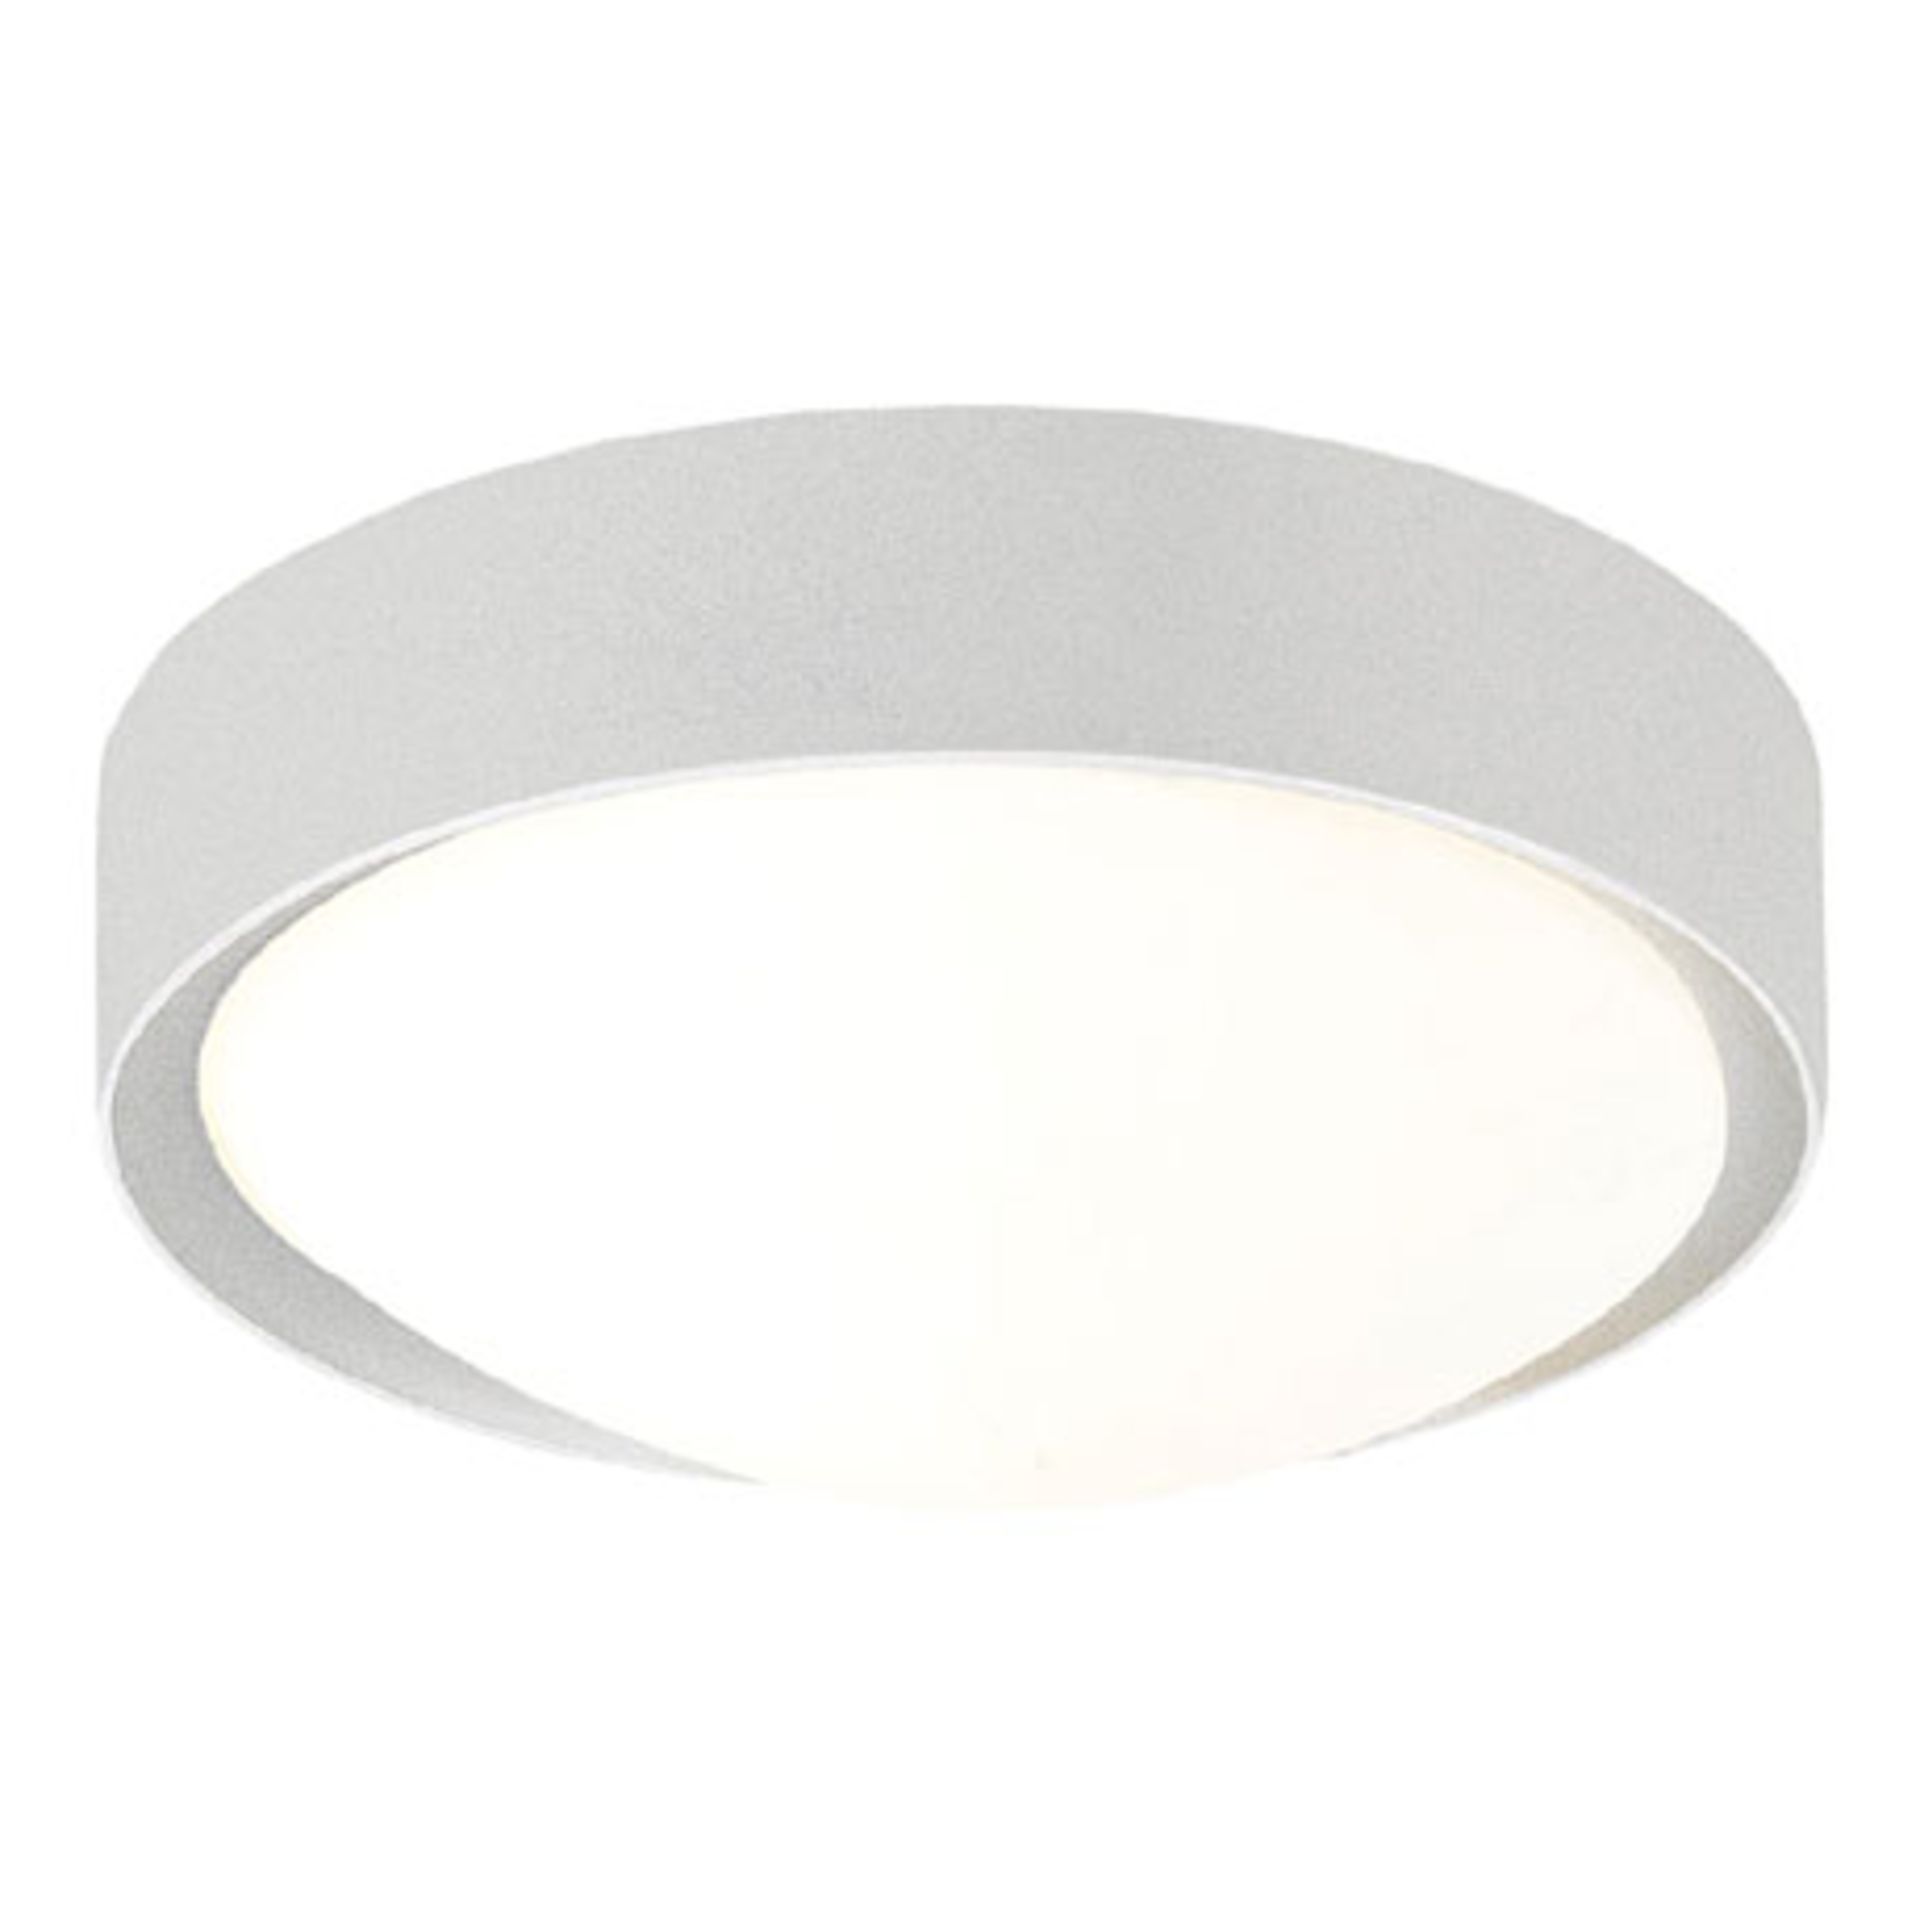 1 x Spa Bathroom Lighting - Ophelia Round Flush Ceiling Light - Unused Boxed Stock - CL011 -